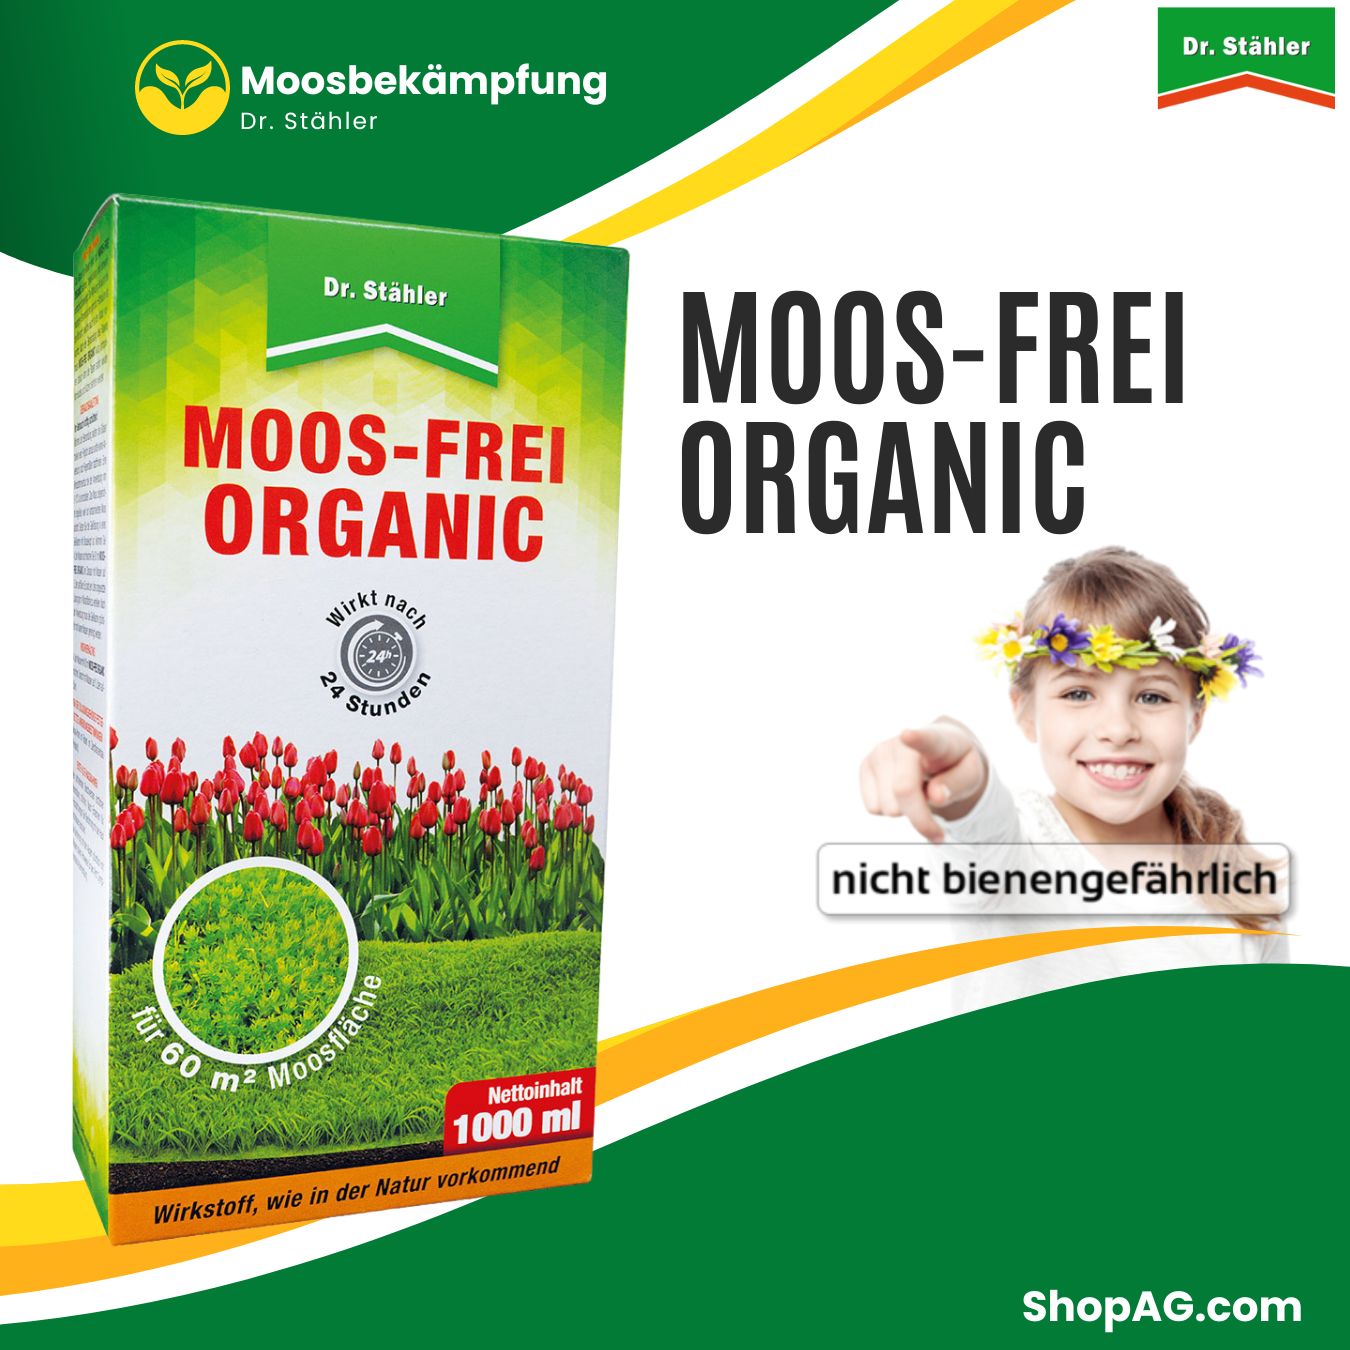 Moos - Frei ORGANIC 1000ml gegen viele Moosarten im Rasen